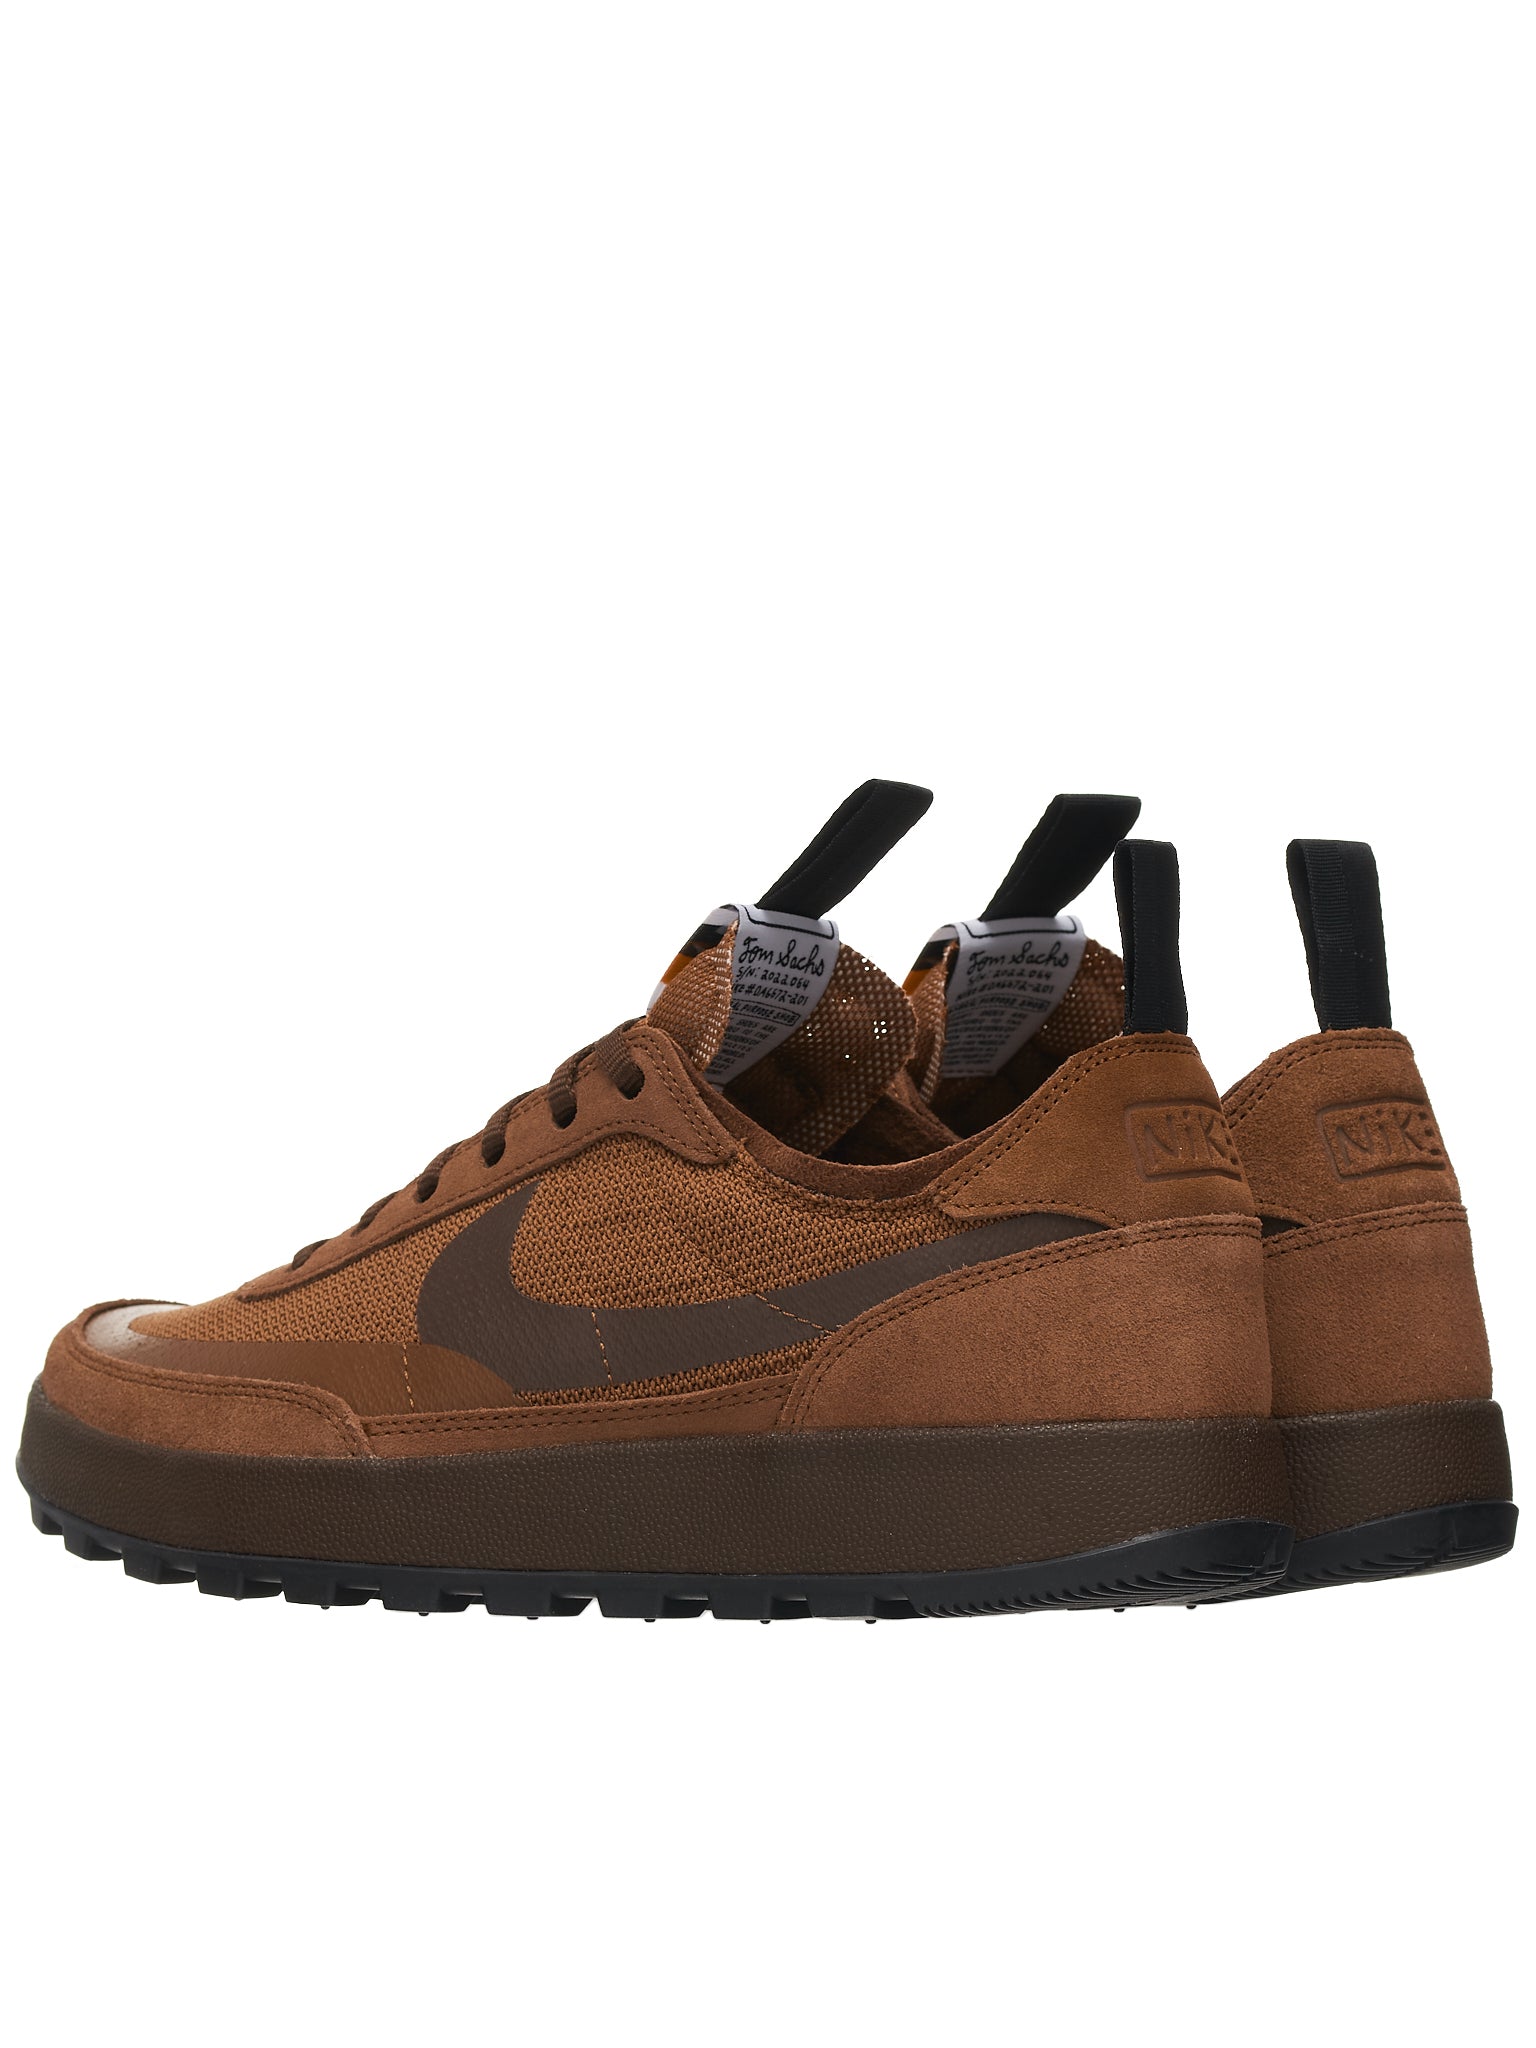 Tom Sachs Nike General Purpose Shoe Brown DA6672-201